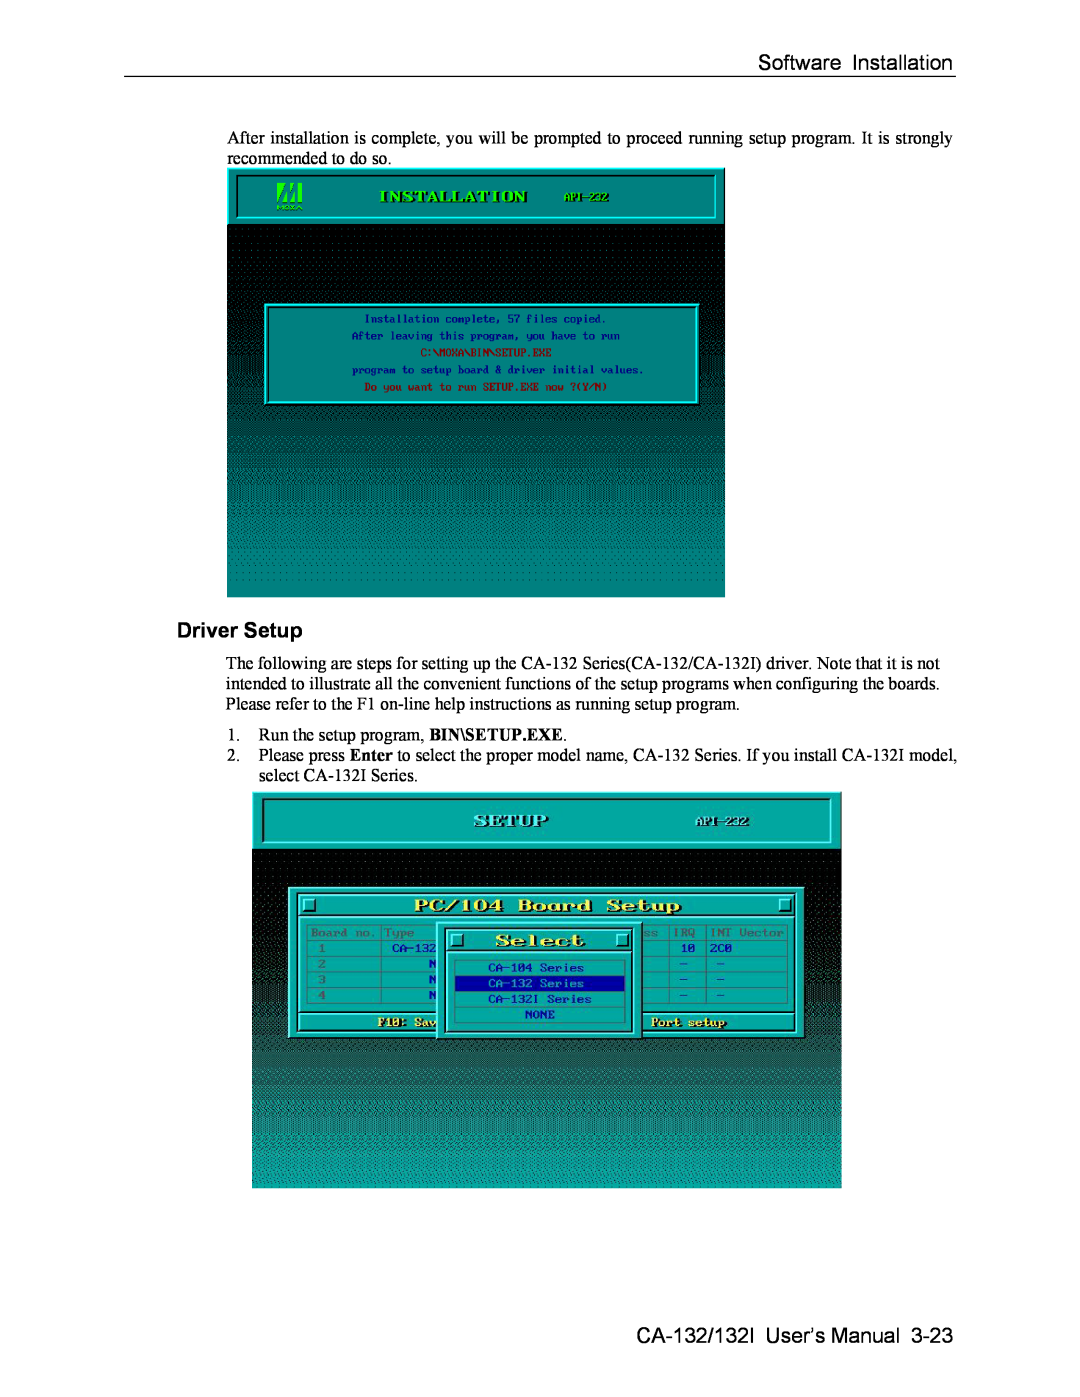 Moxa Technologies user manual Driver Setup, Software Installation, CA-132/132I User’s Manual 